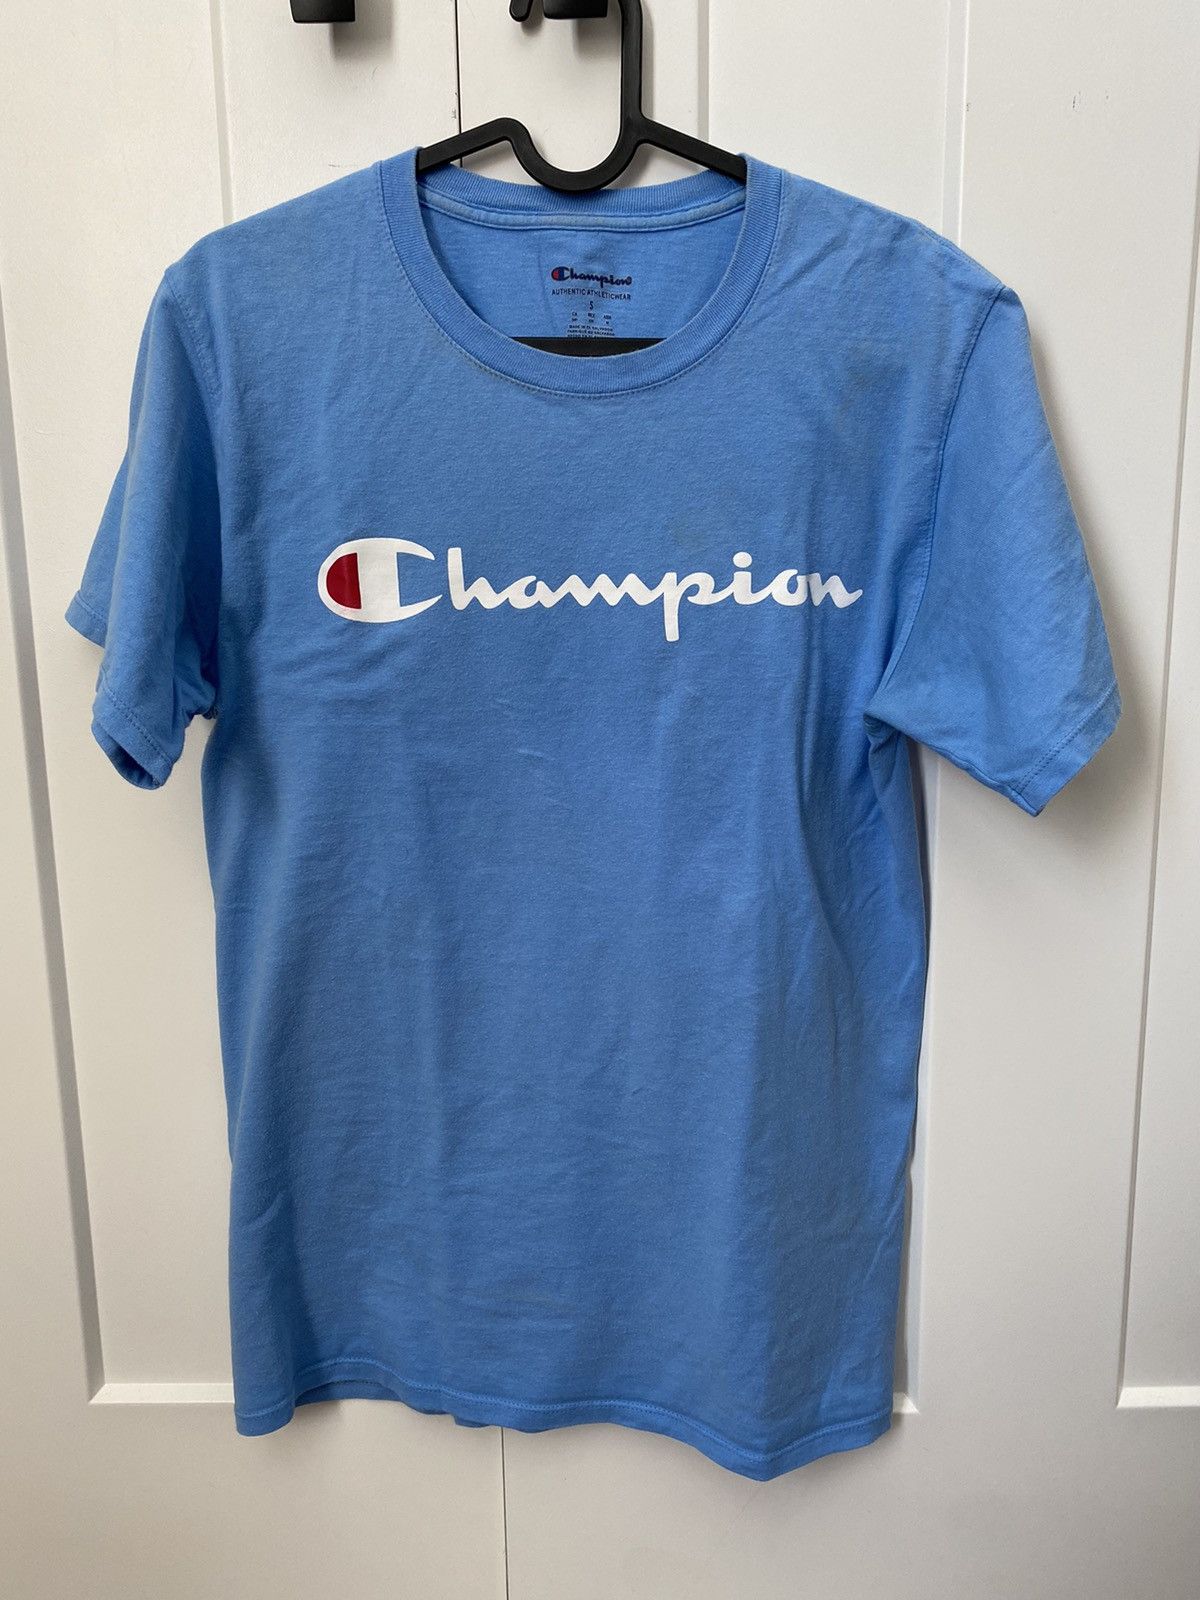 Champion Baby blue champion logo shirt | Grailed